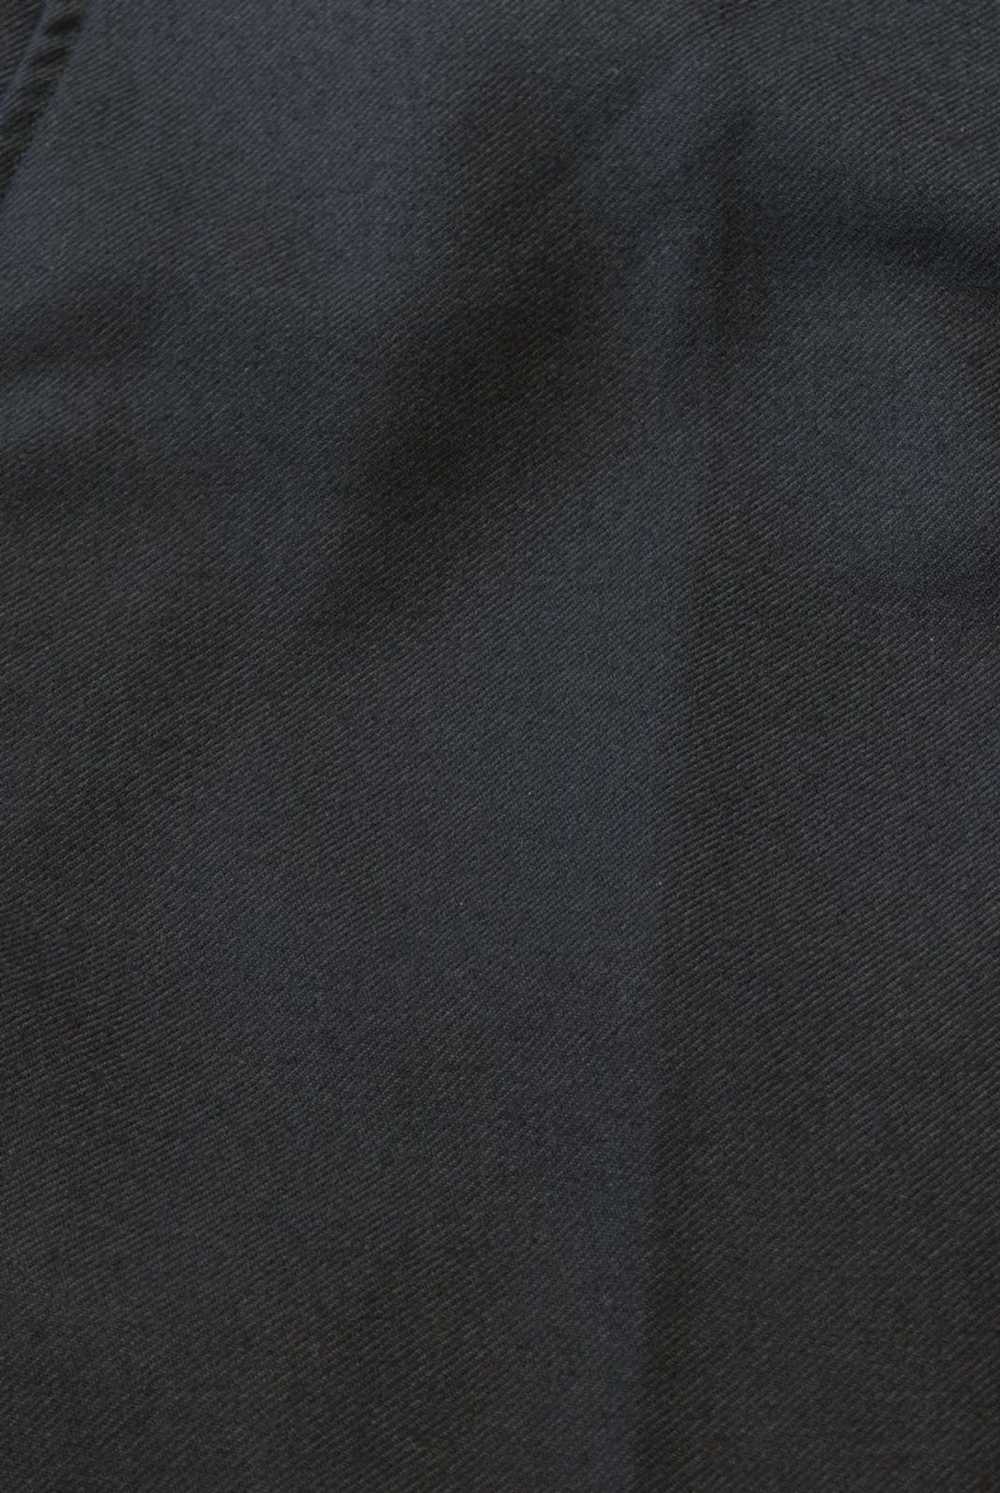 Marni Marni Wool Navy Trousers - image 4